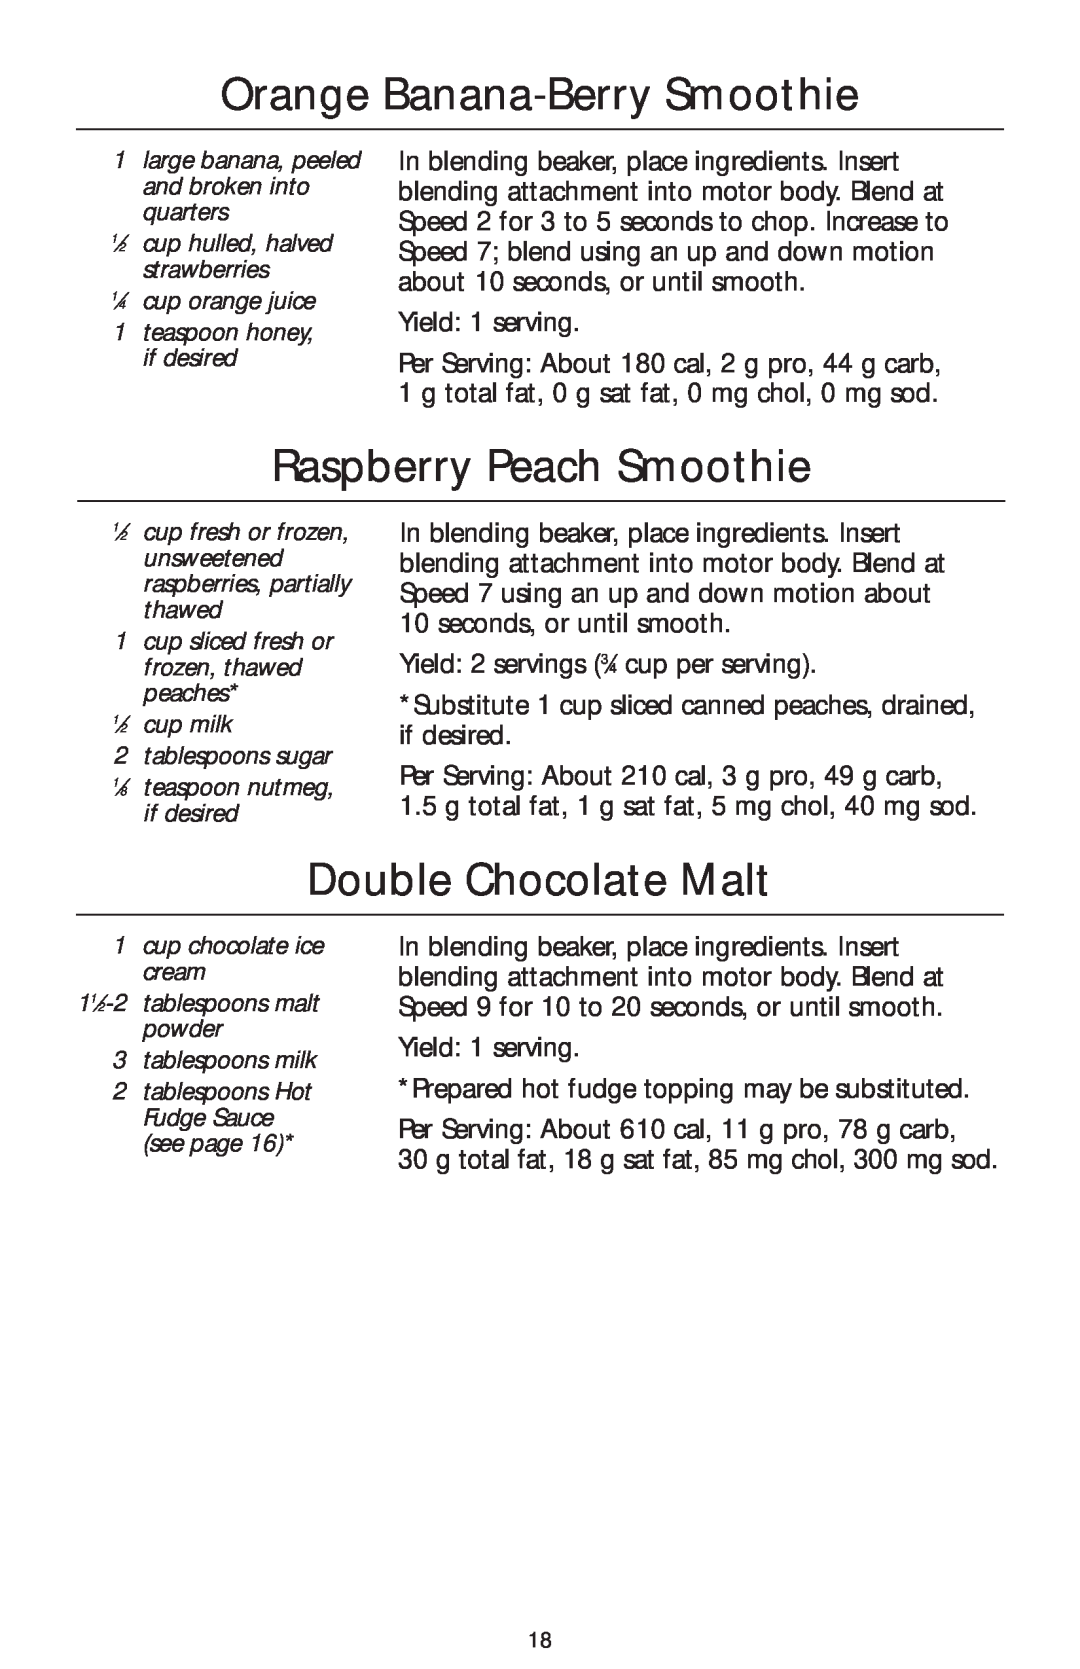 KitchenAid KHB300, KHB100, KHB200 manual Orange Banana-Berry Smoothie, Raspberry Peach Smoothie, Double Chocolate Malt 